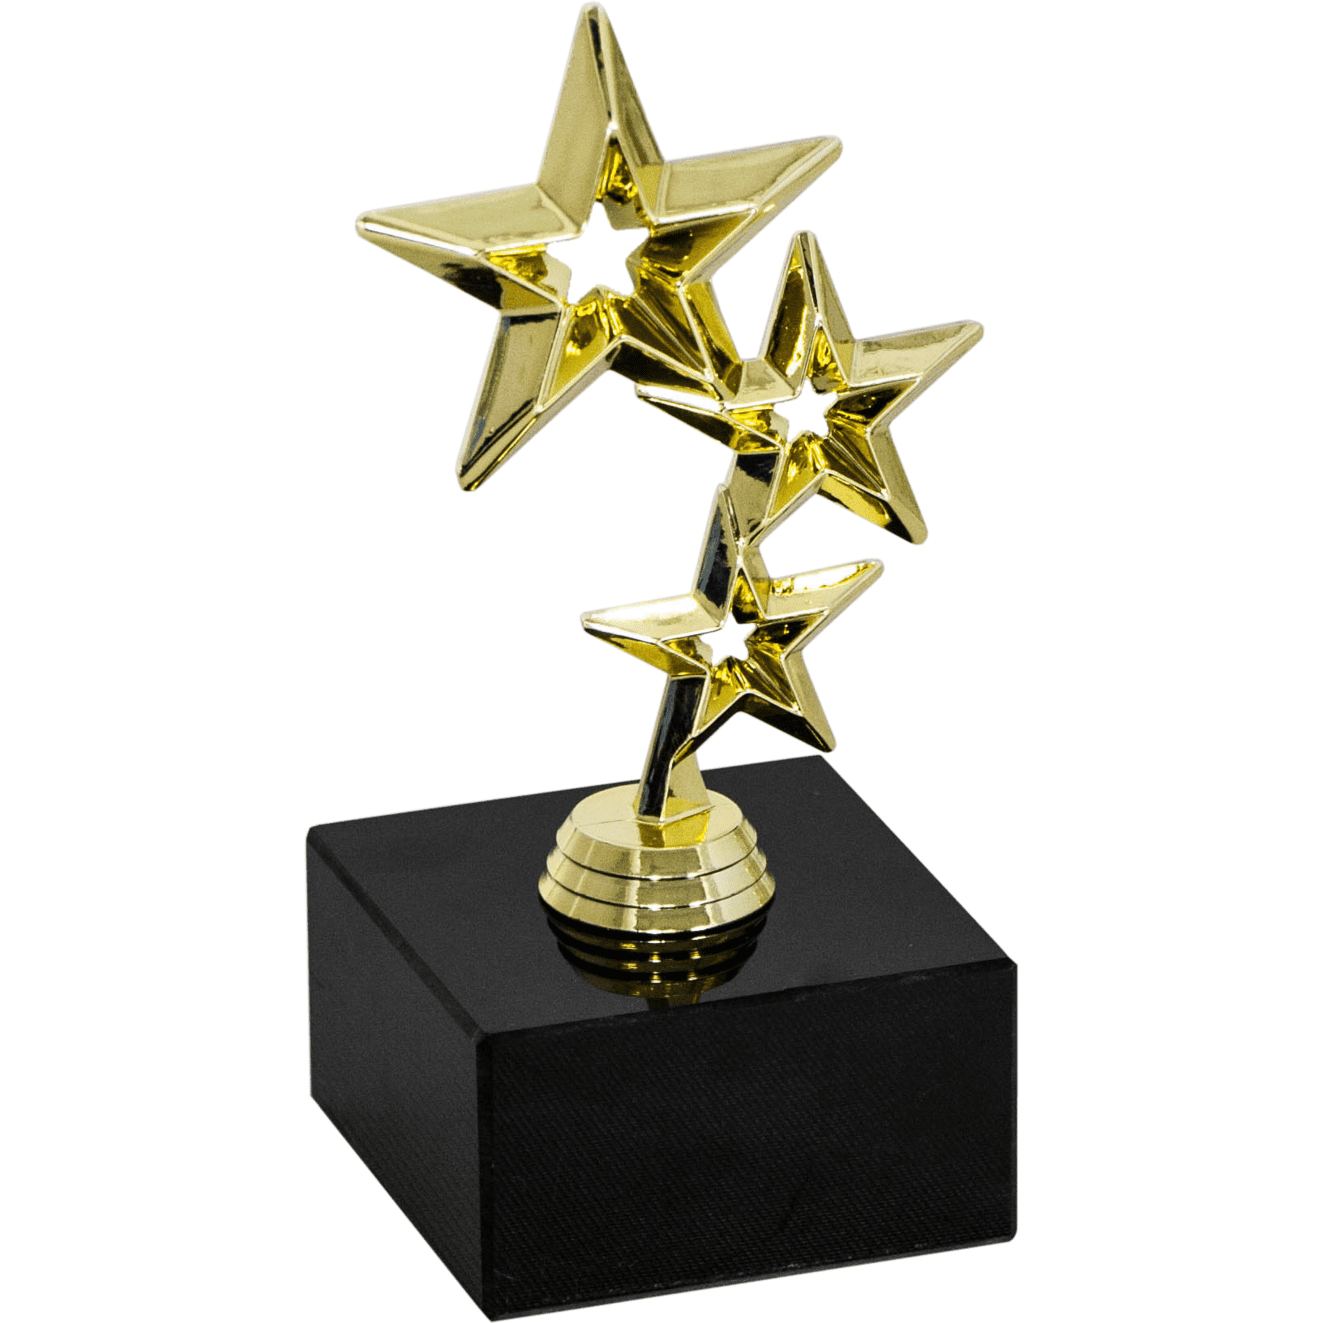 Triple Star Award | Alliance Awards LLC.